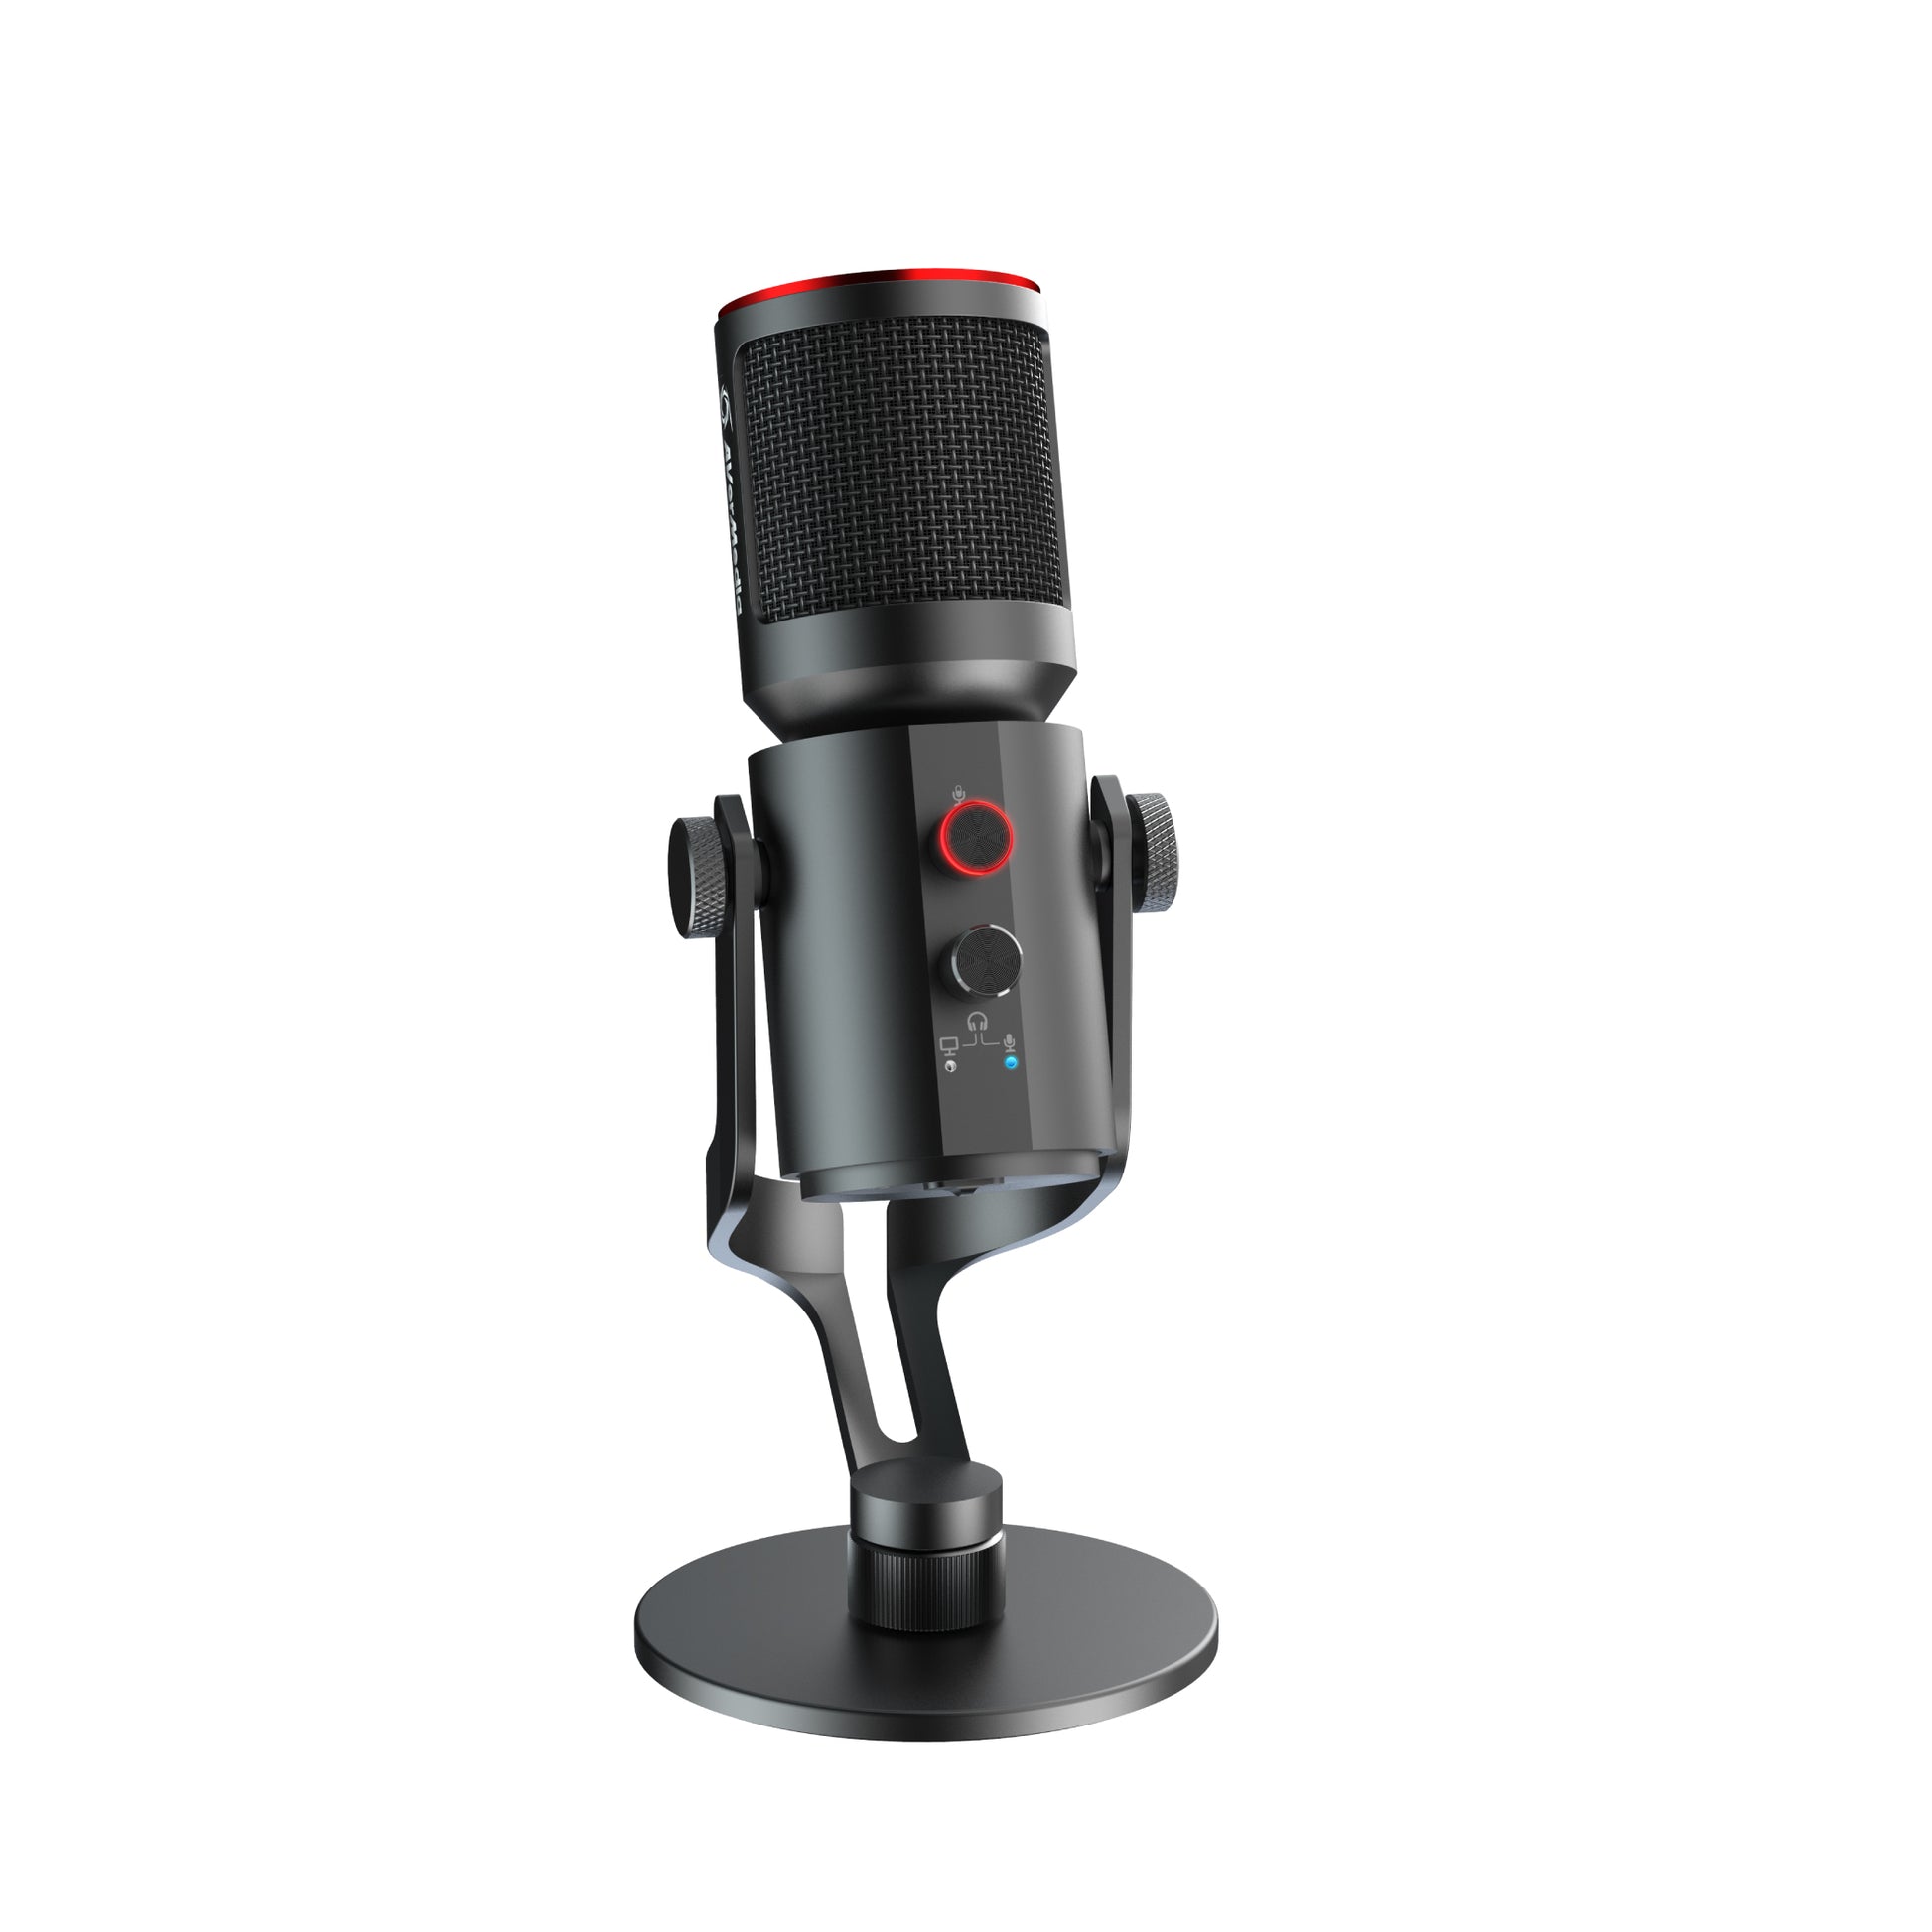 Limited Edition] AVerMedia AM350 Live Streamer Microphone – AVerMedia AVerMedia Technologies Kit 